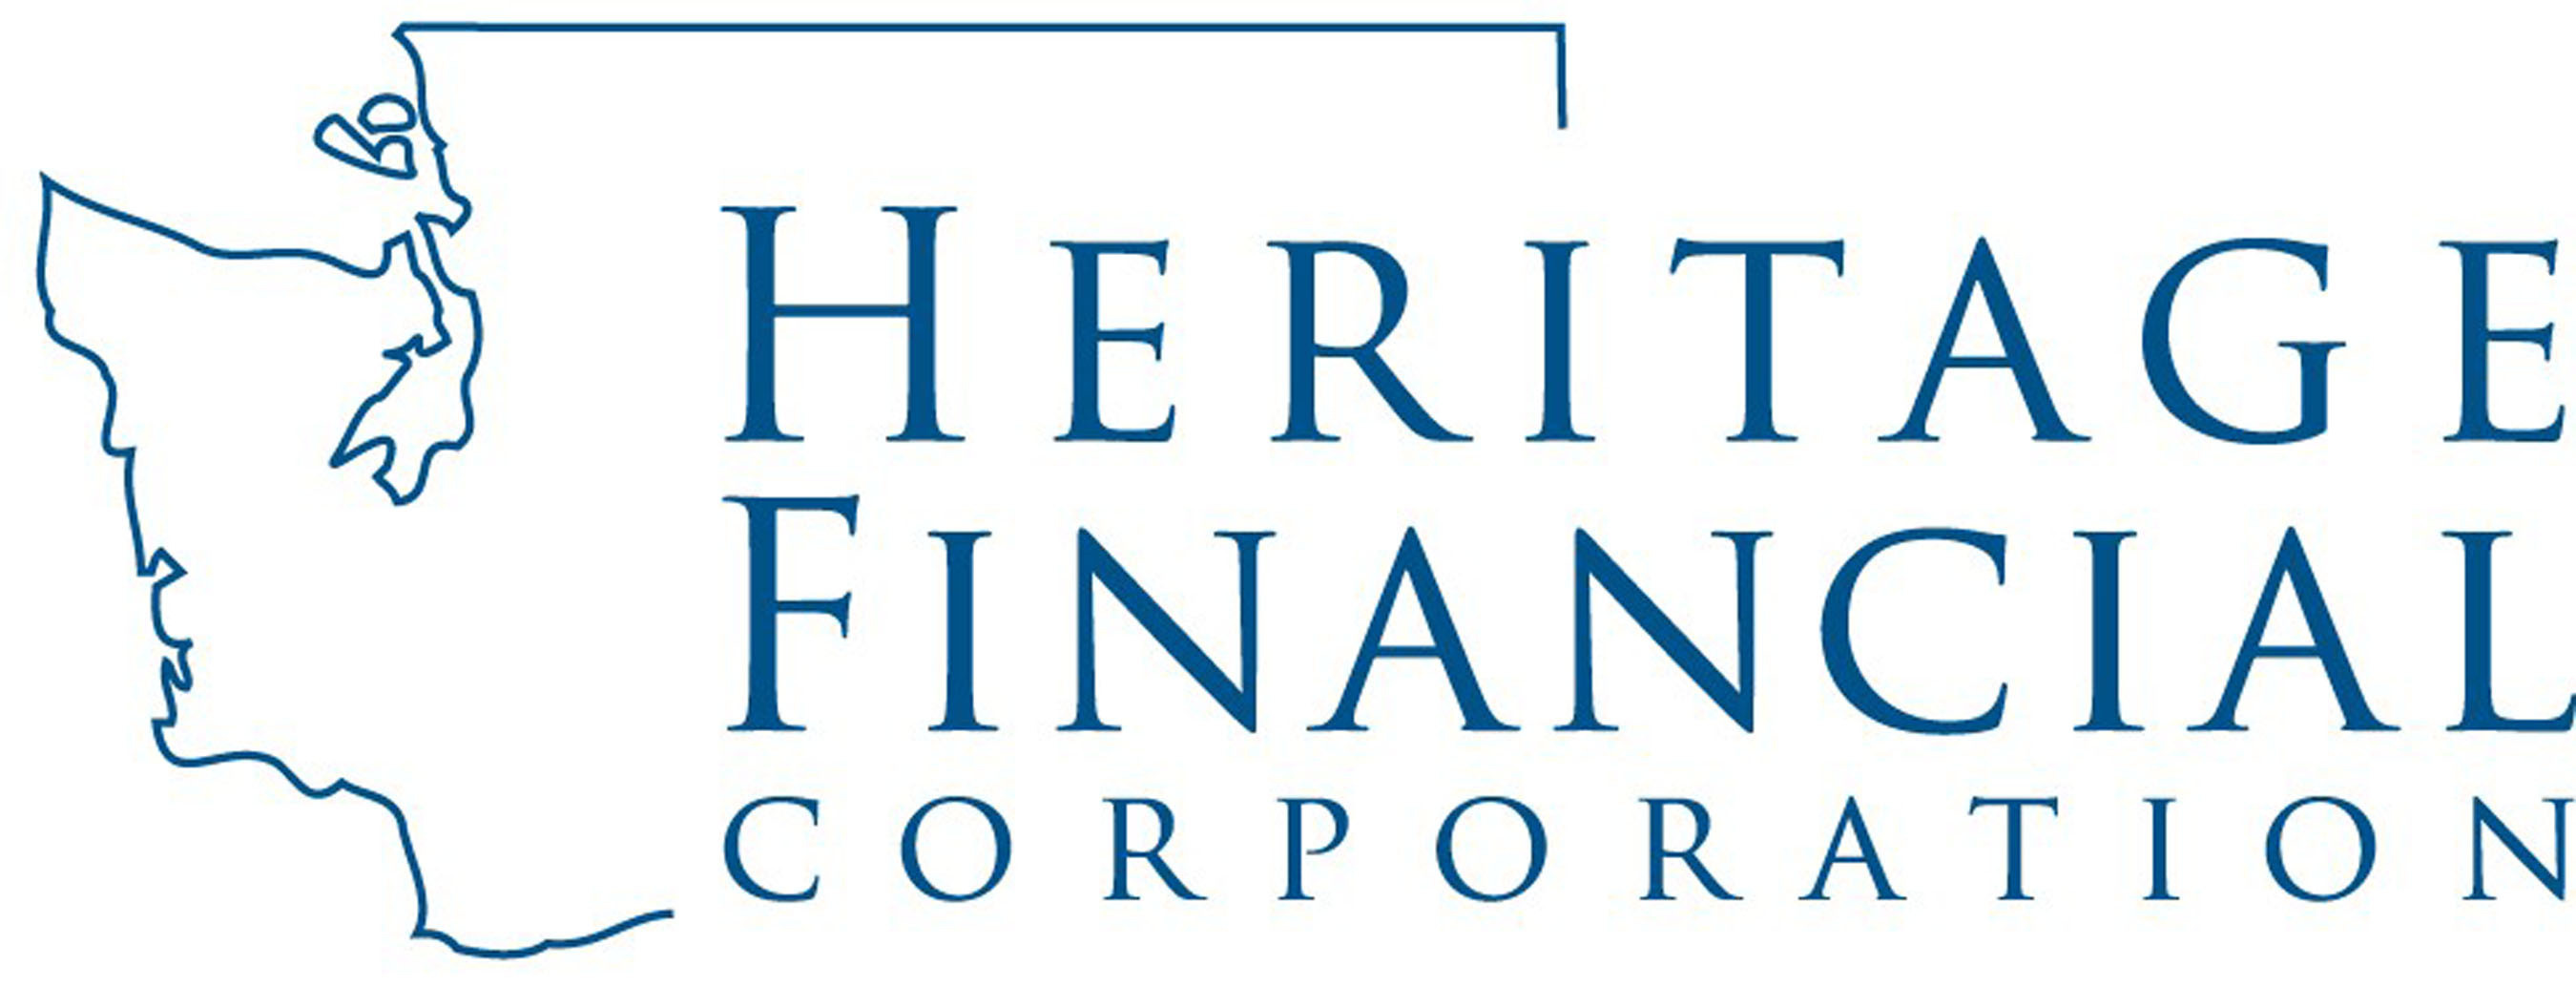 Heritage Financial Corporation logo.